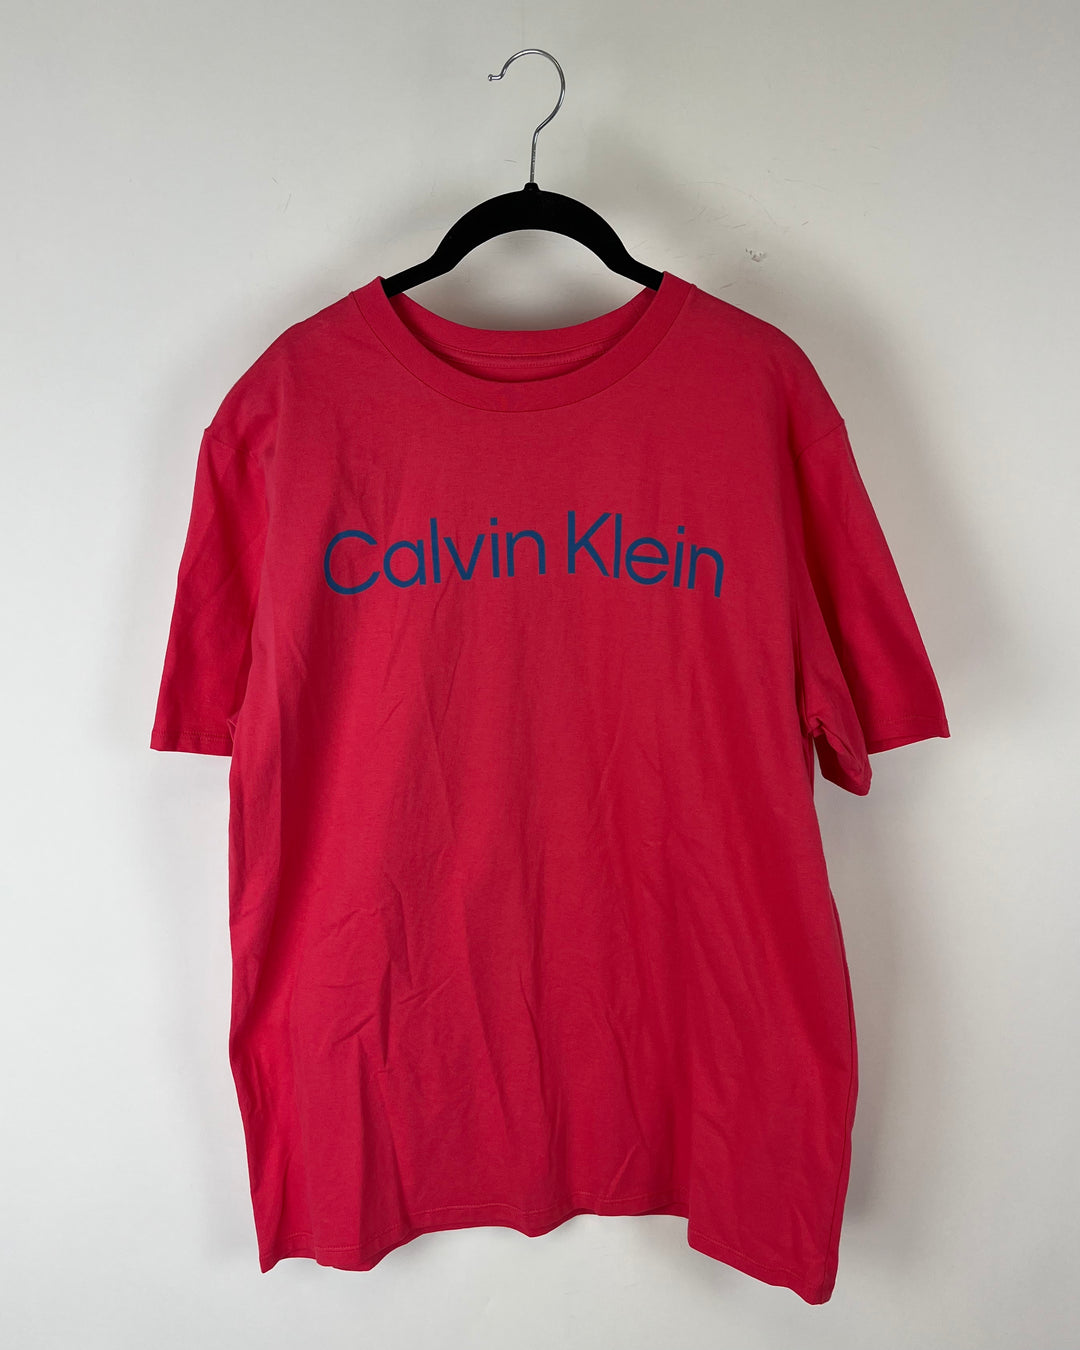 MENS Pink and Blue Logo T-Shirt - Medium